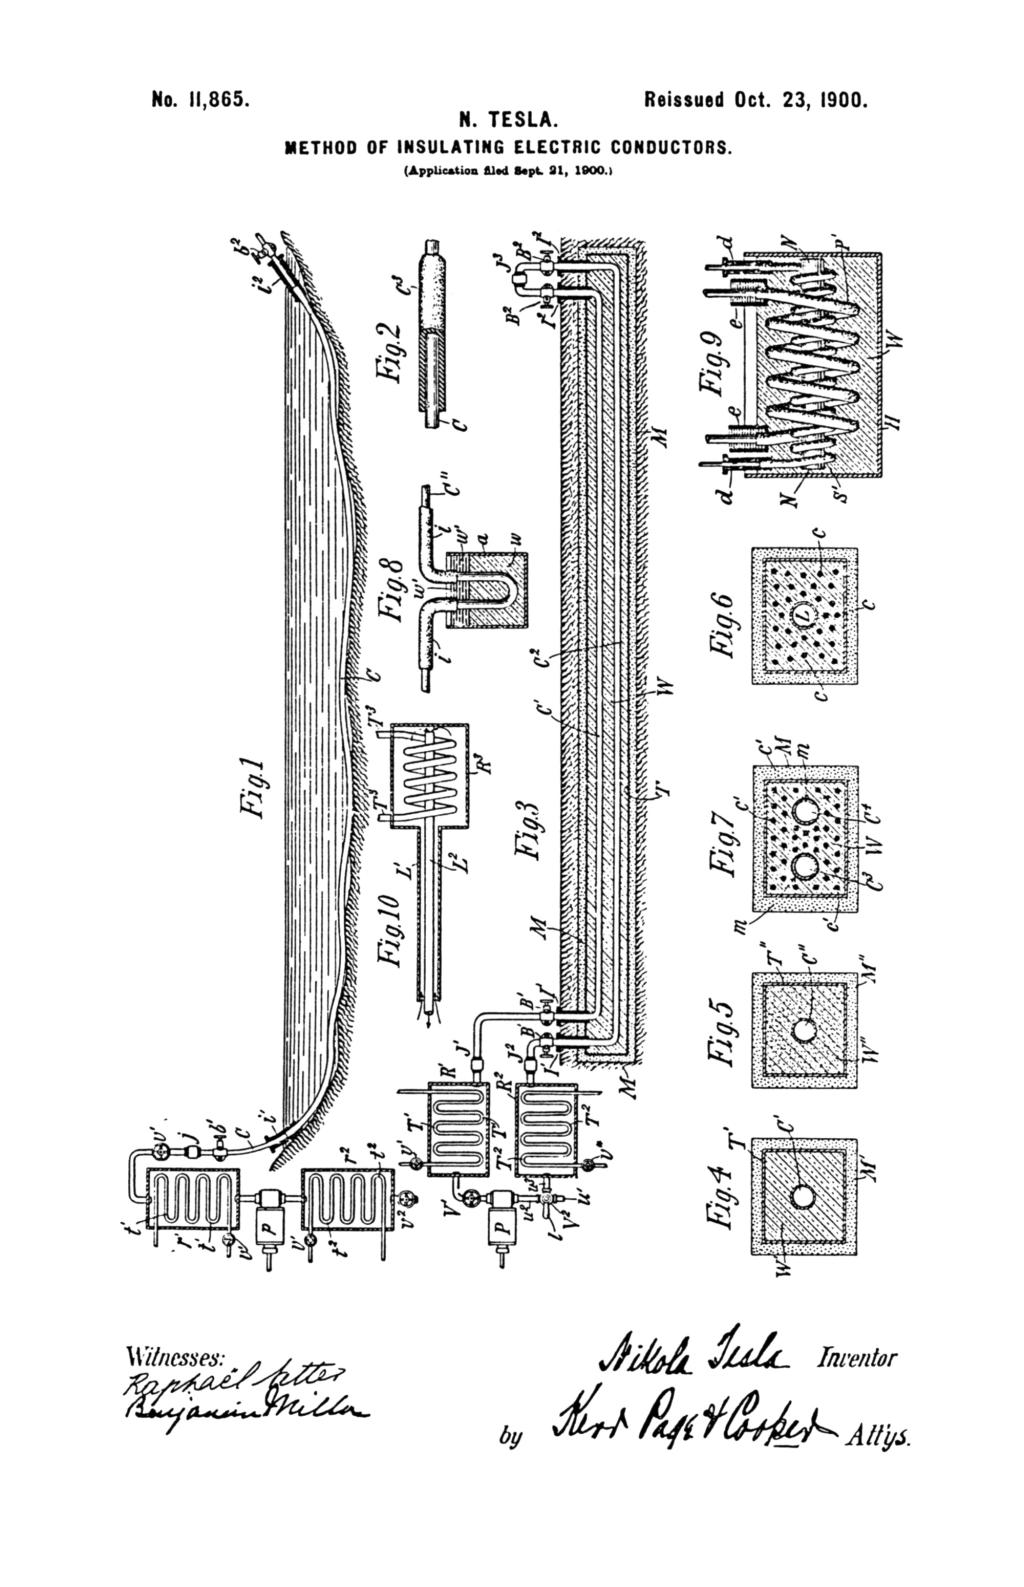 Nikola Tesla U.S. Patent 11,865 - Method of Insulating Electric Conductors - Image 1